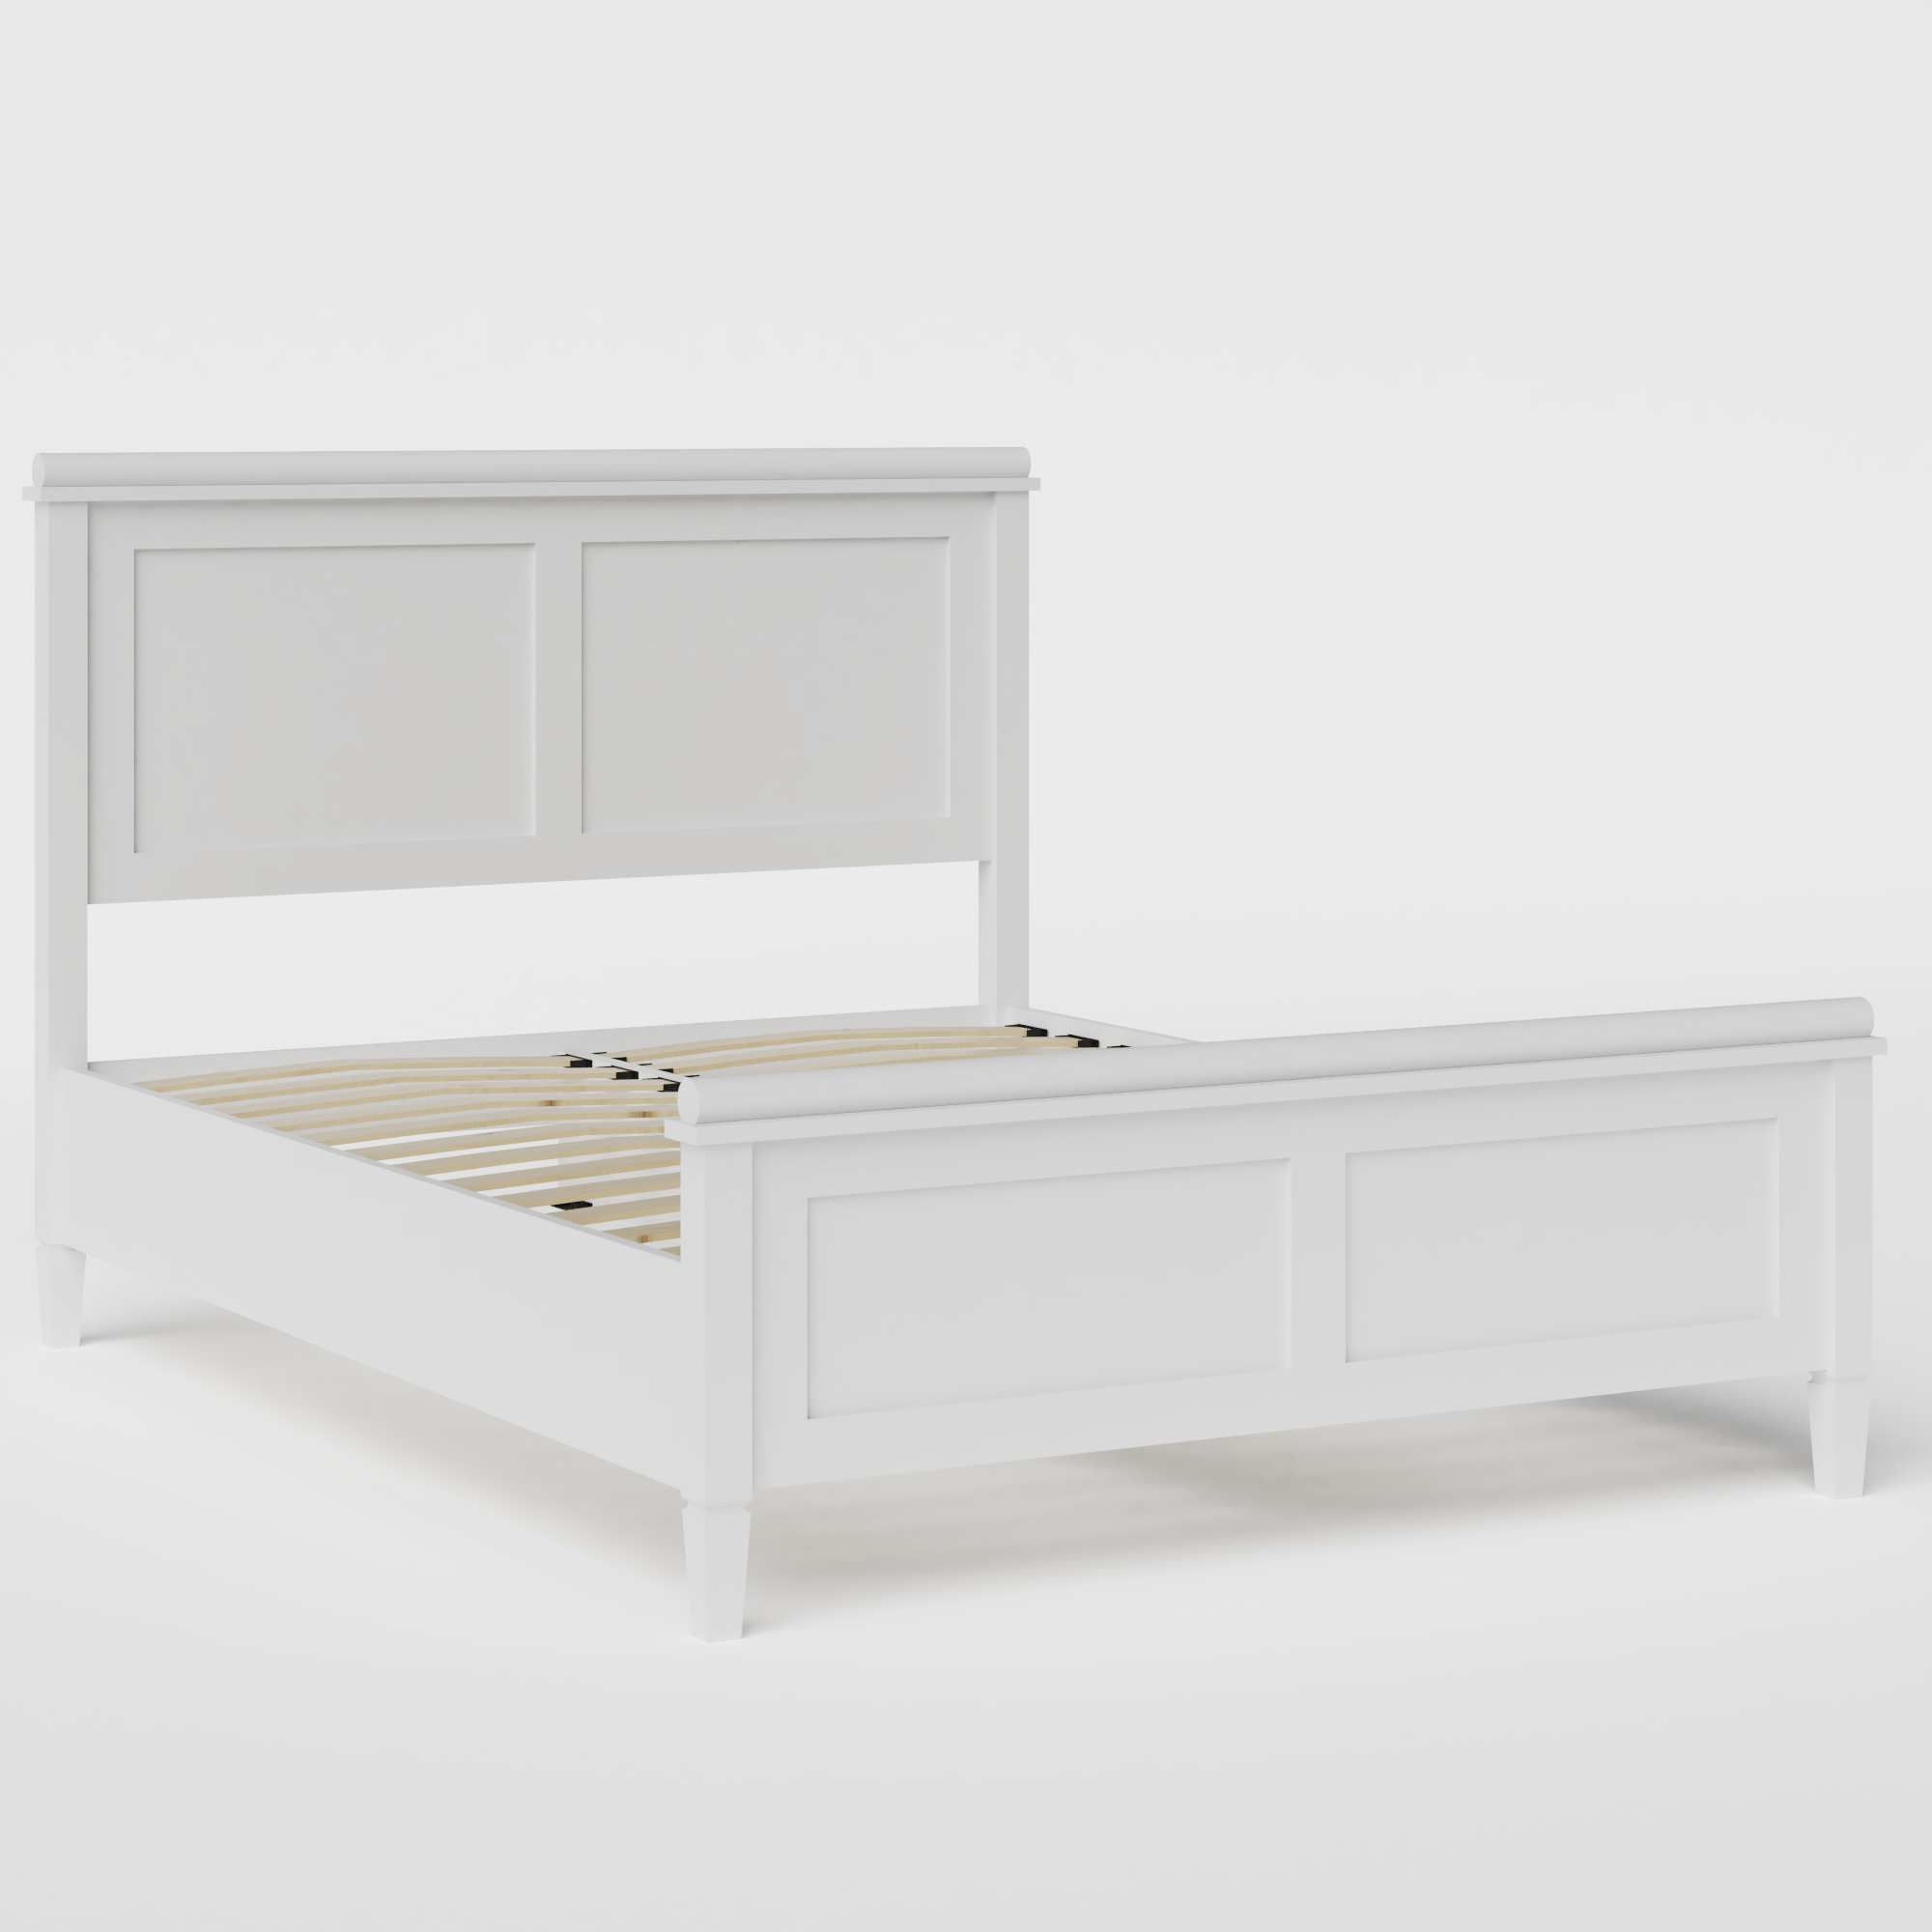 Nocturne Painted letto in legno bianco